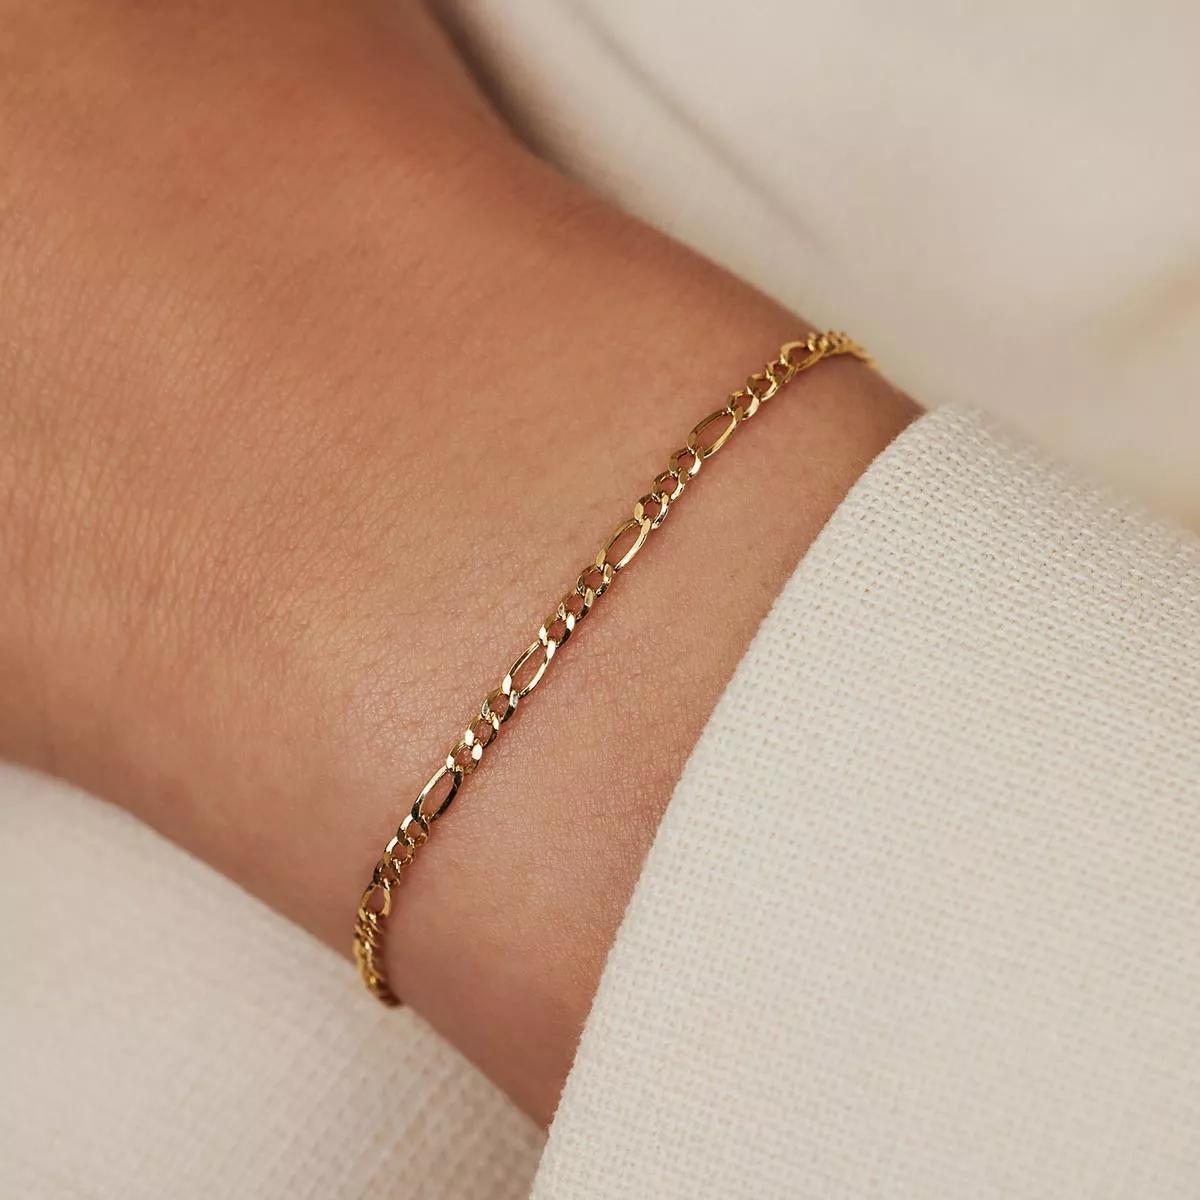 isabel bernard bijouterie, rivoli nina 14 karat bracelet with royal link en gold - braceletpour dames